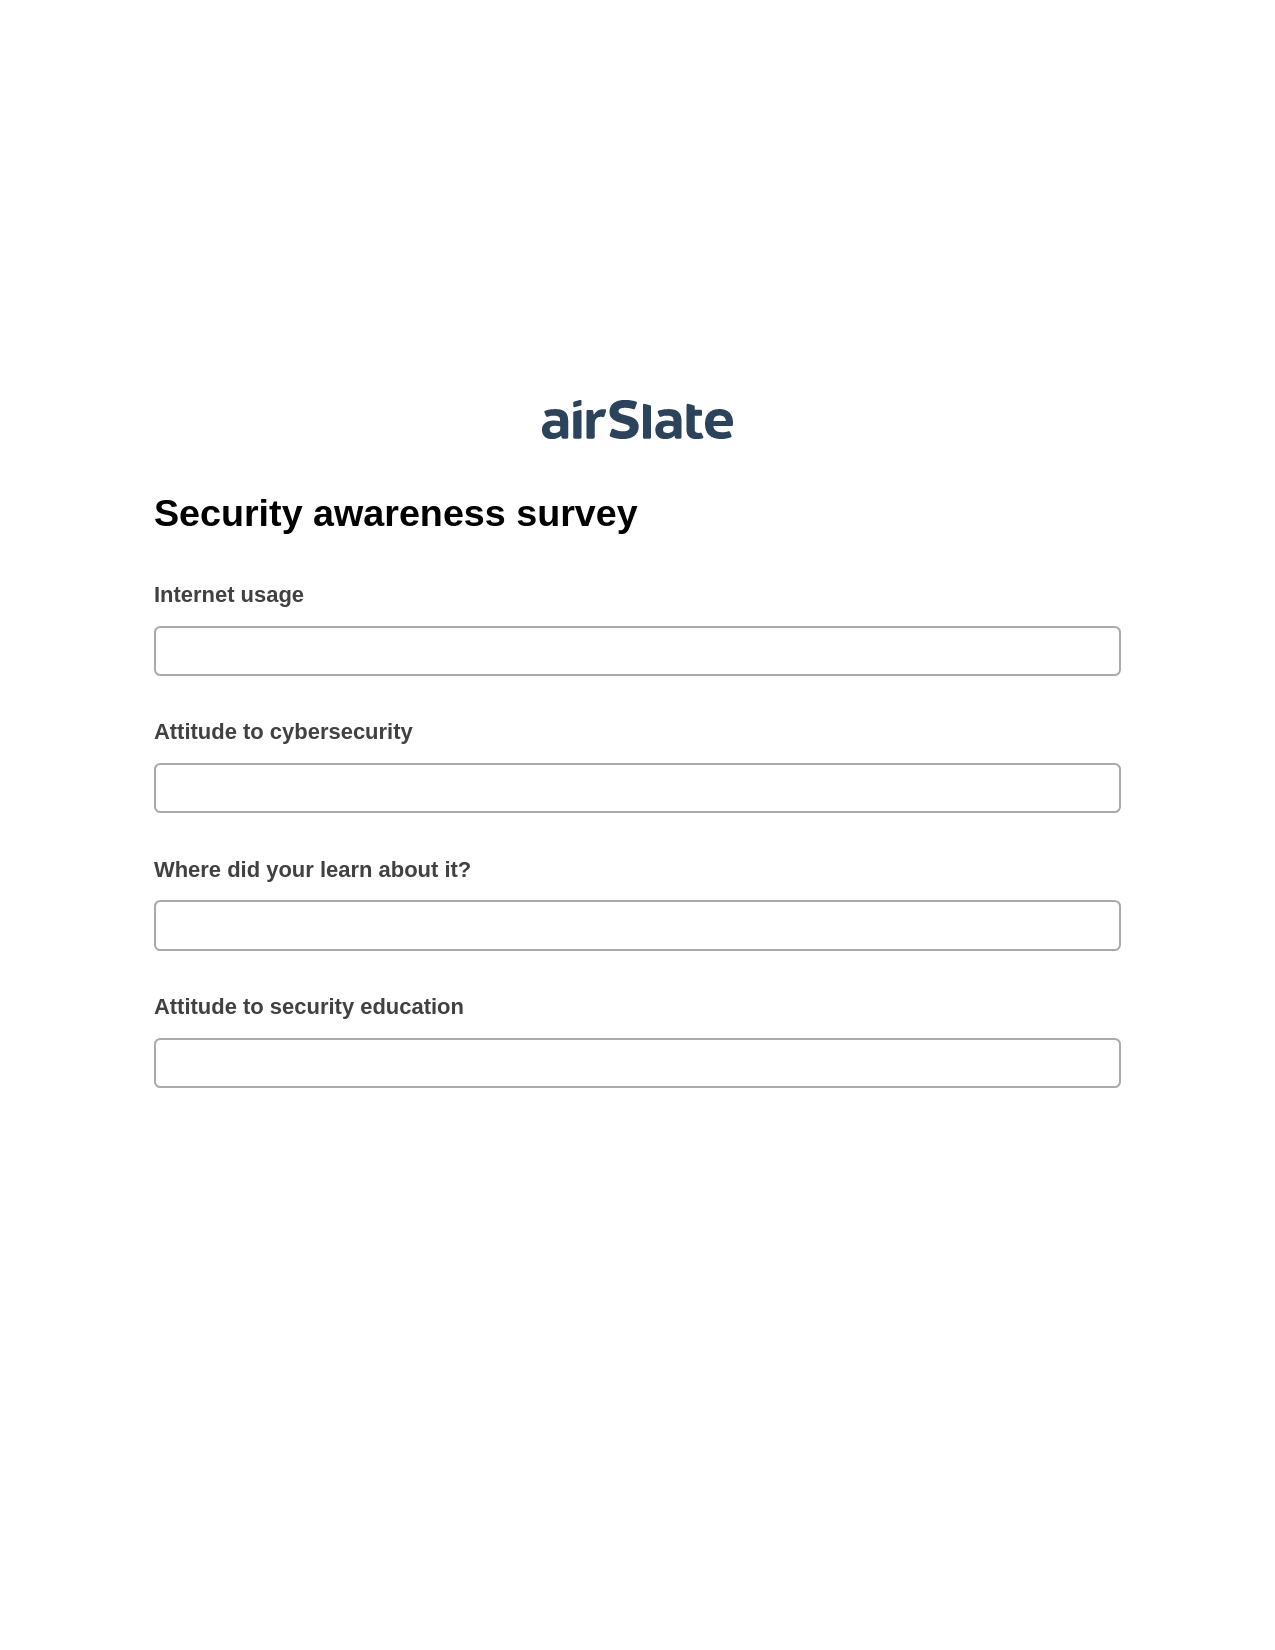 Multirole Security awareness survey Pre-fill from Excel Spreadsheet Bot, SendGrid send Campaign bot, Export to Google Sheet Bot